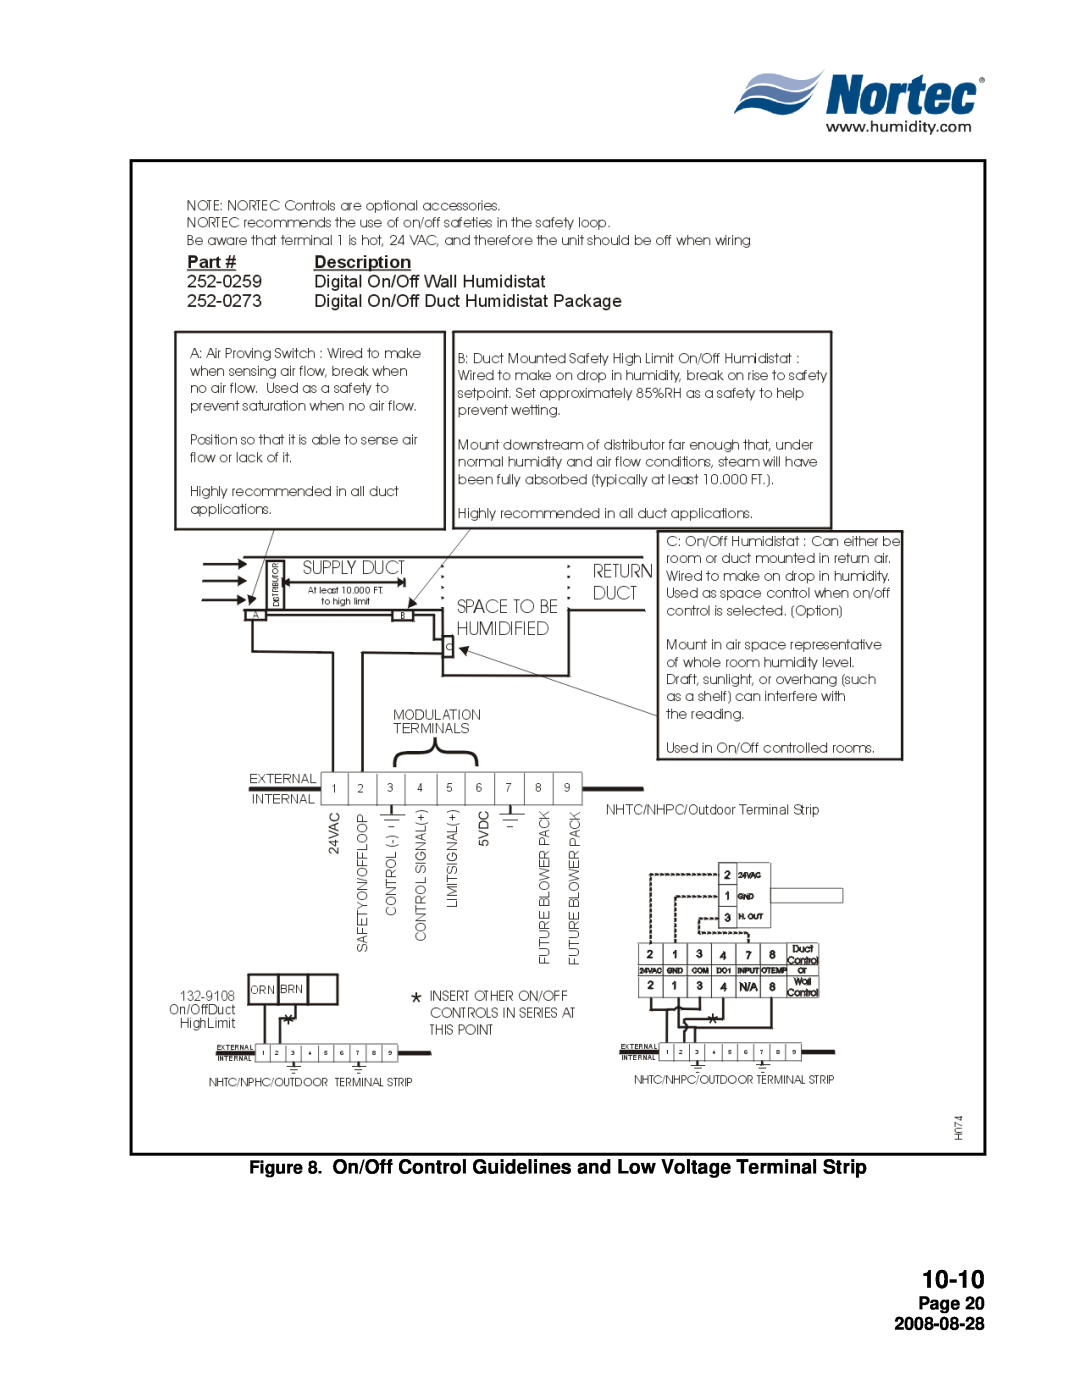 Nortec NH Series installation manual 10-10, Page 20 